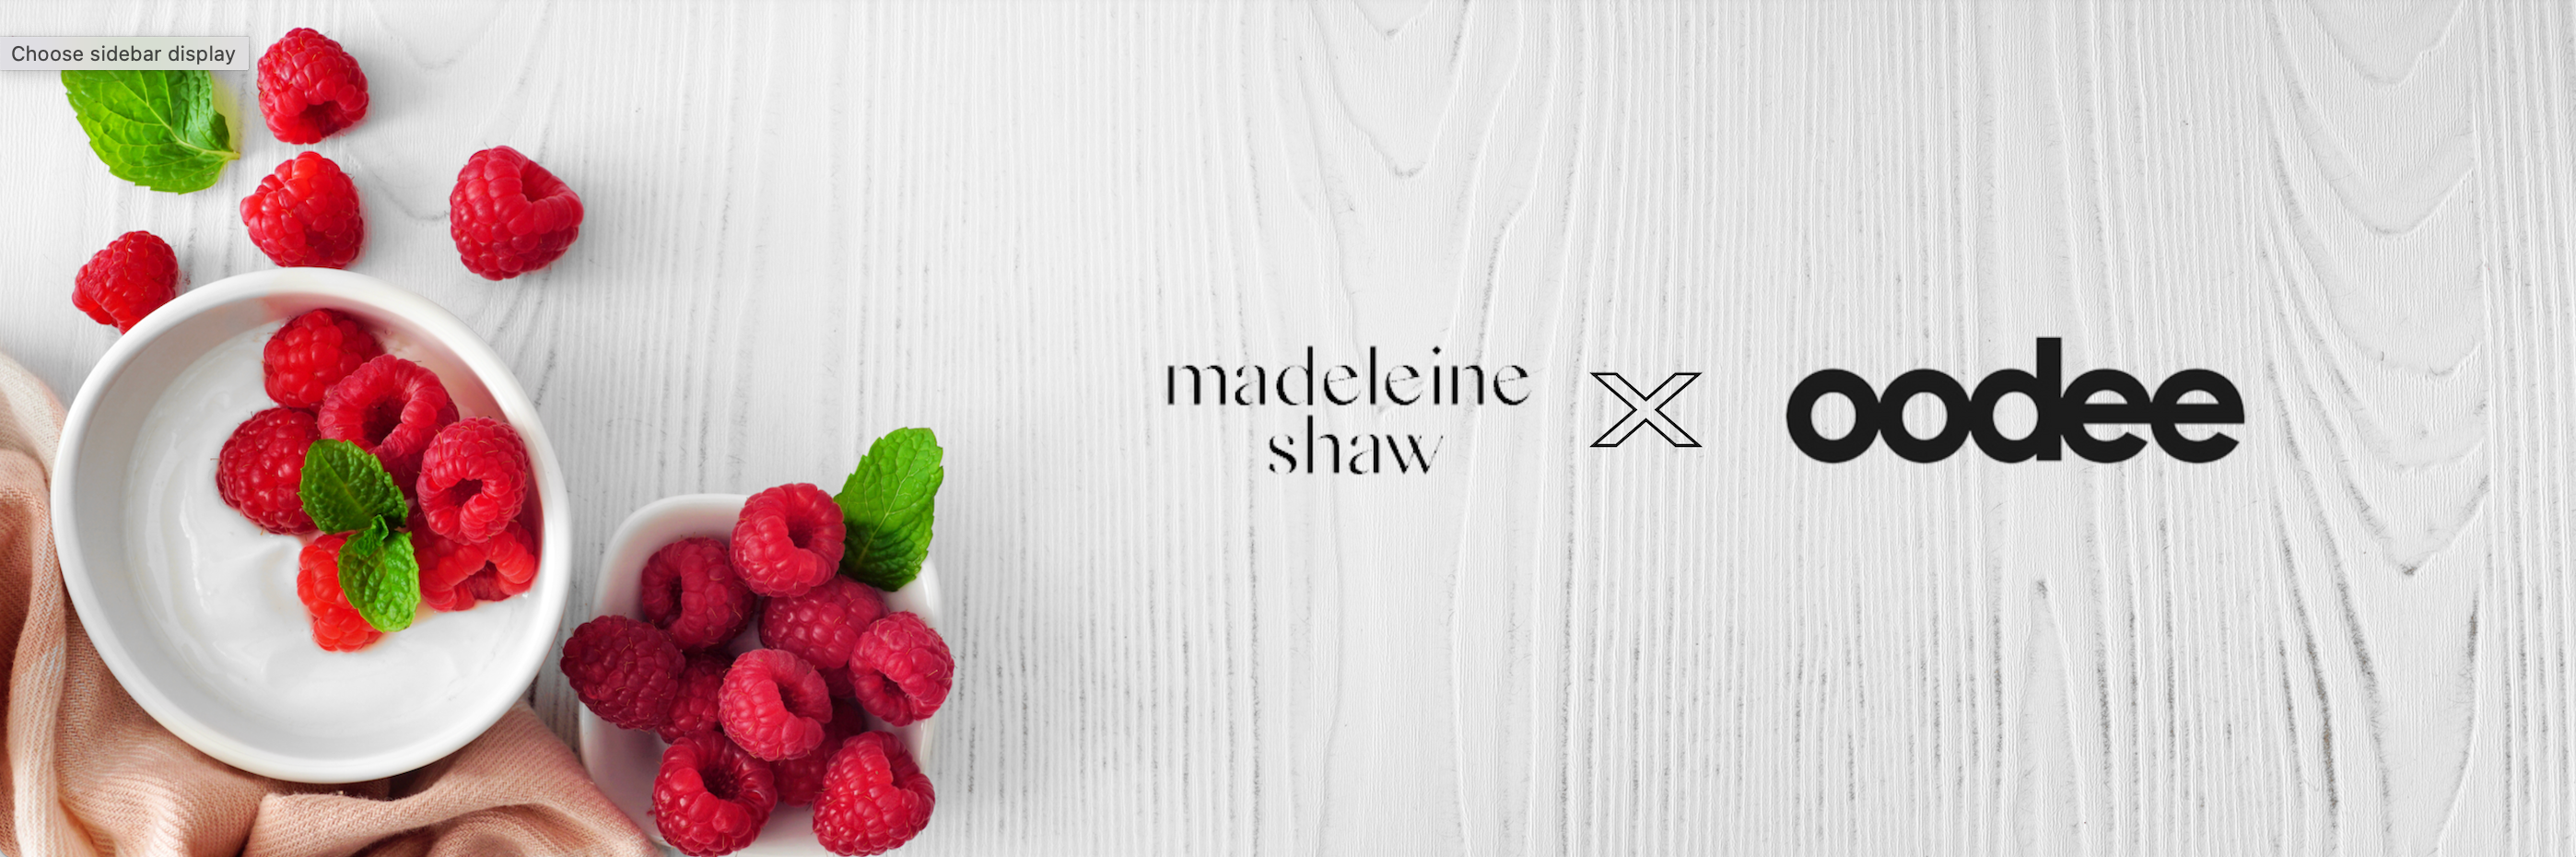 Madeleine Shaw’s morning smoothie